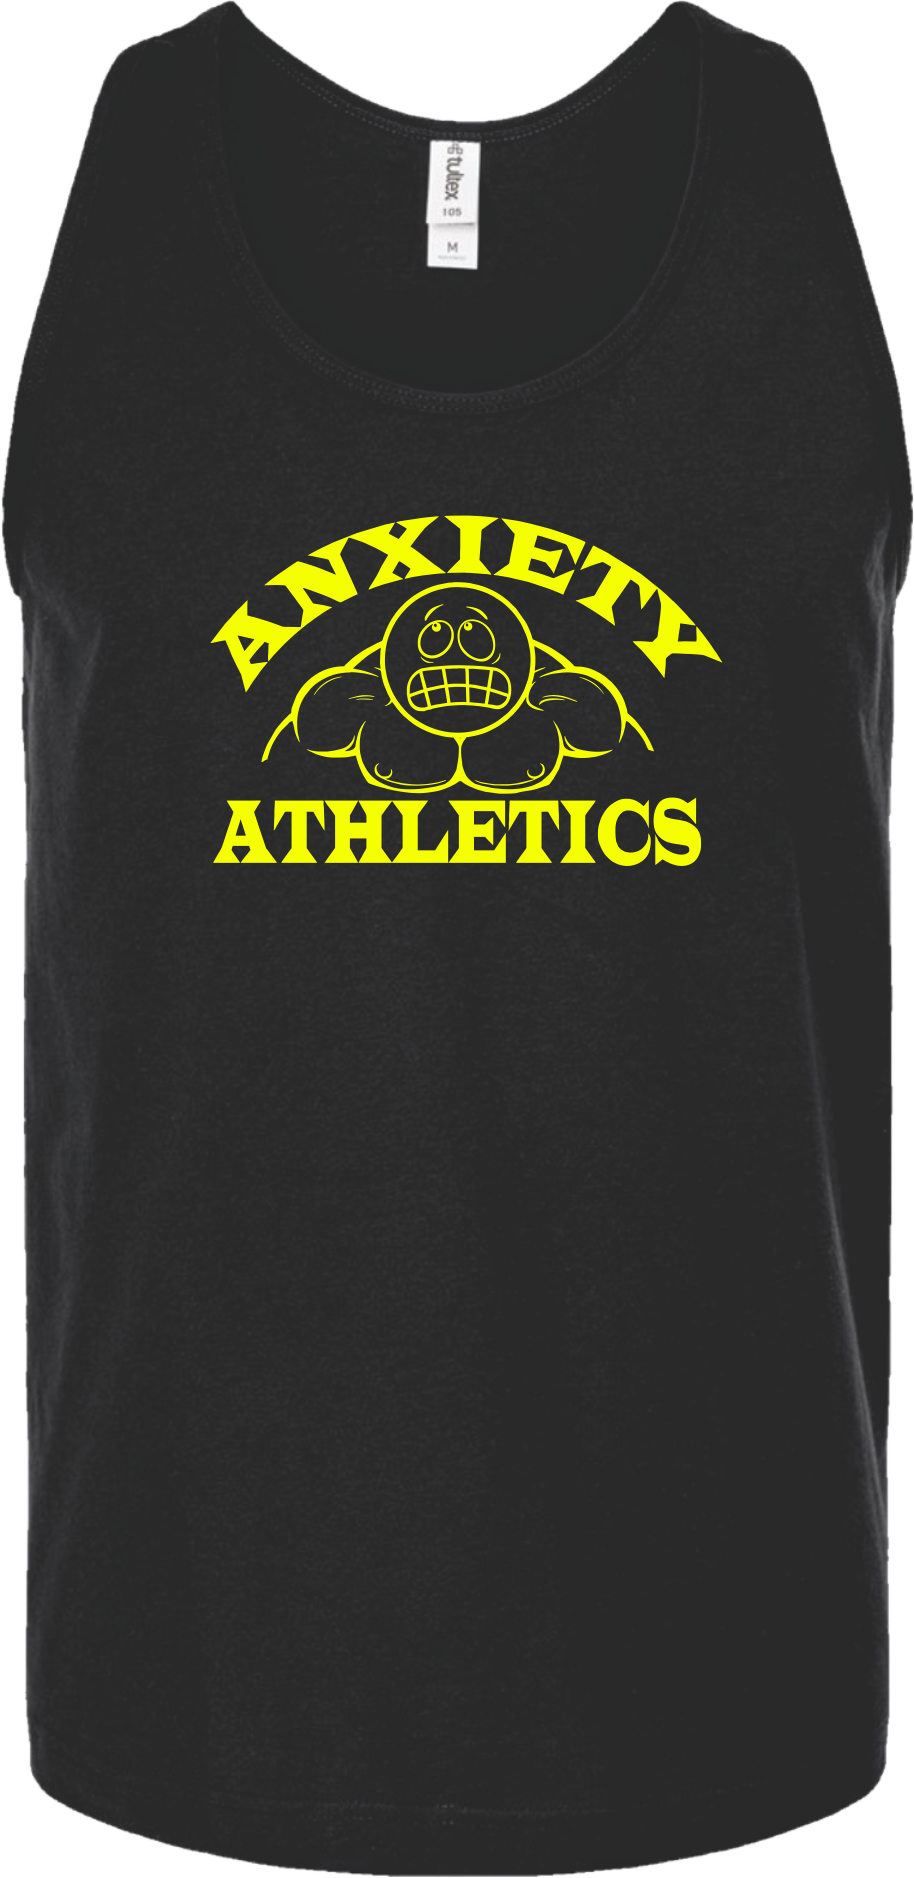 Anxiety Athletics Black Gym Tank